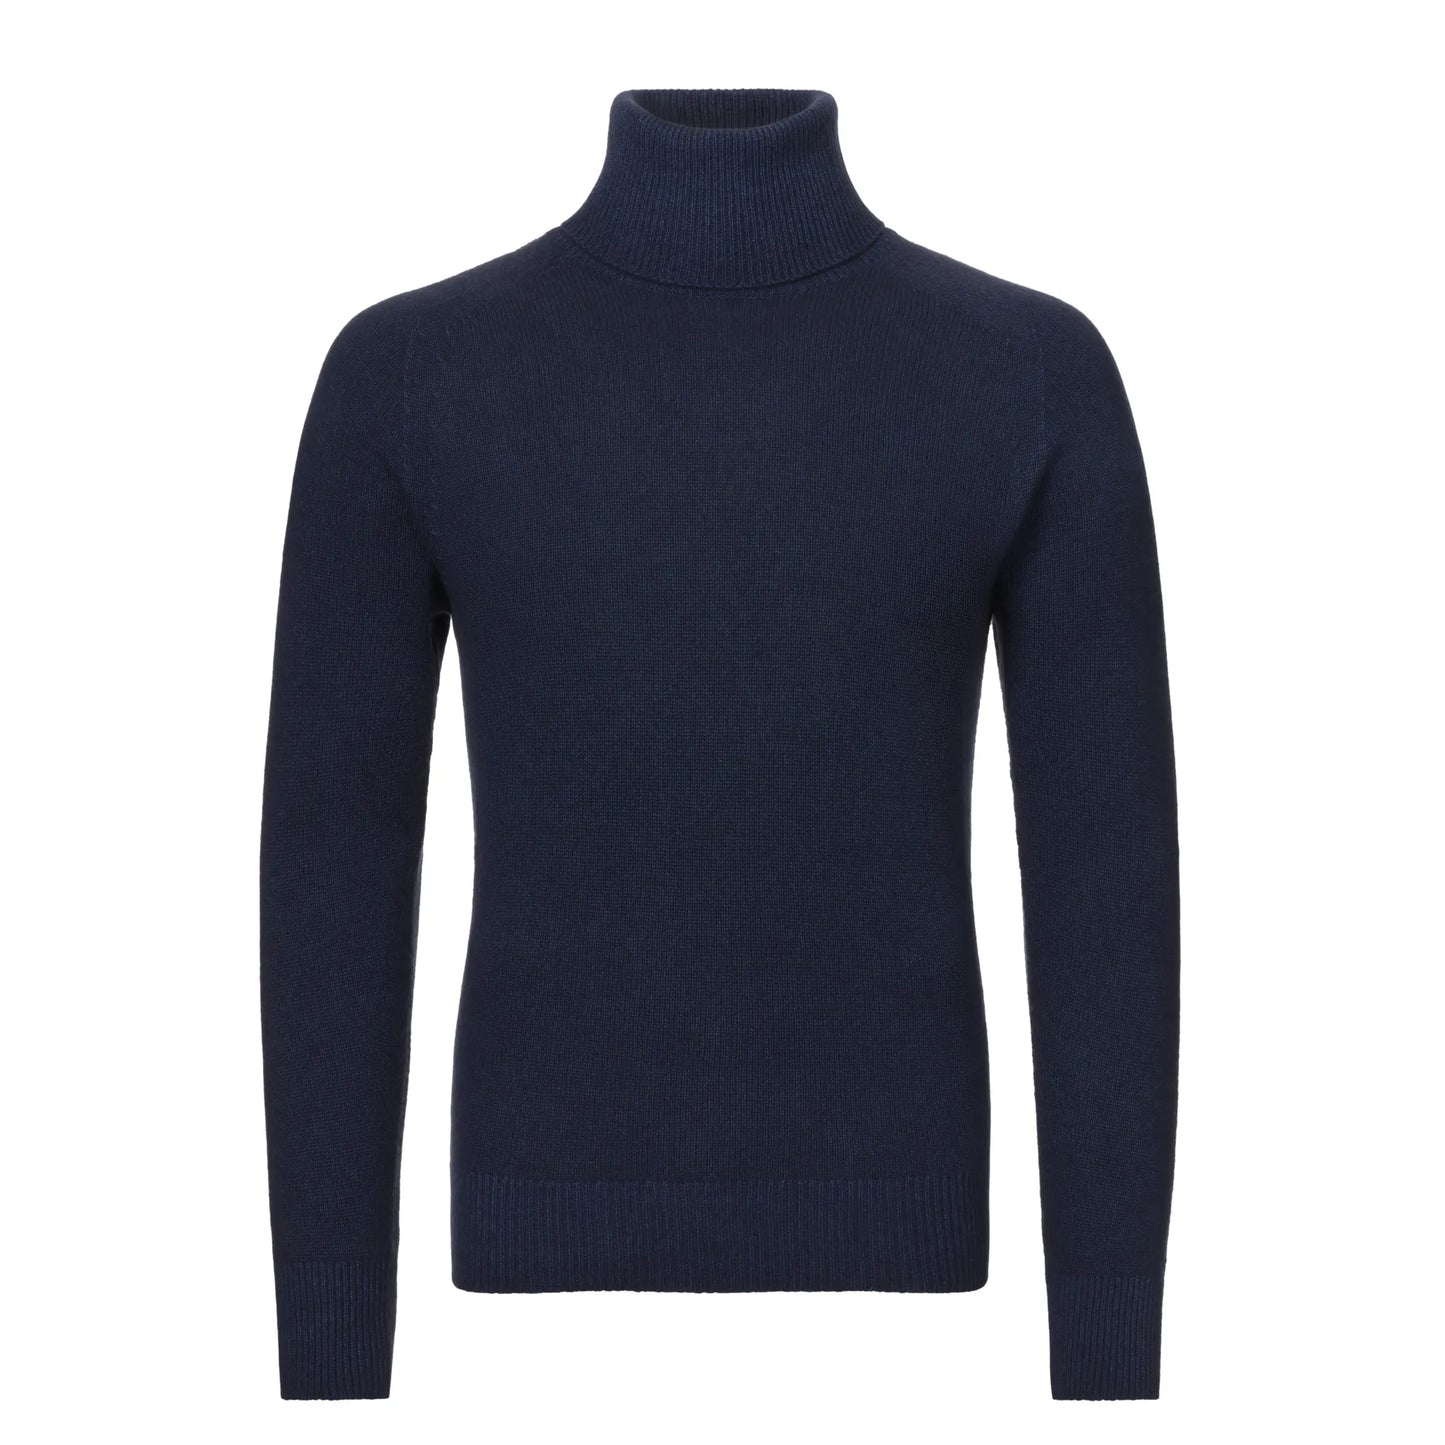 Turtleneck Cashmere Navy Blue Sweater